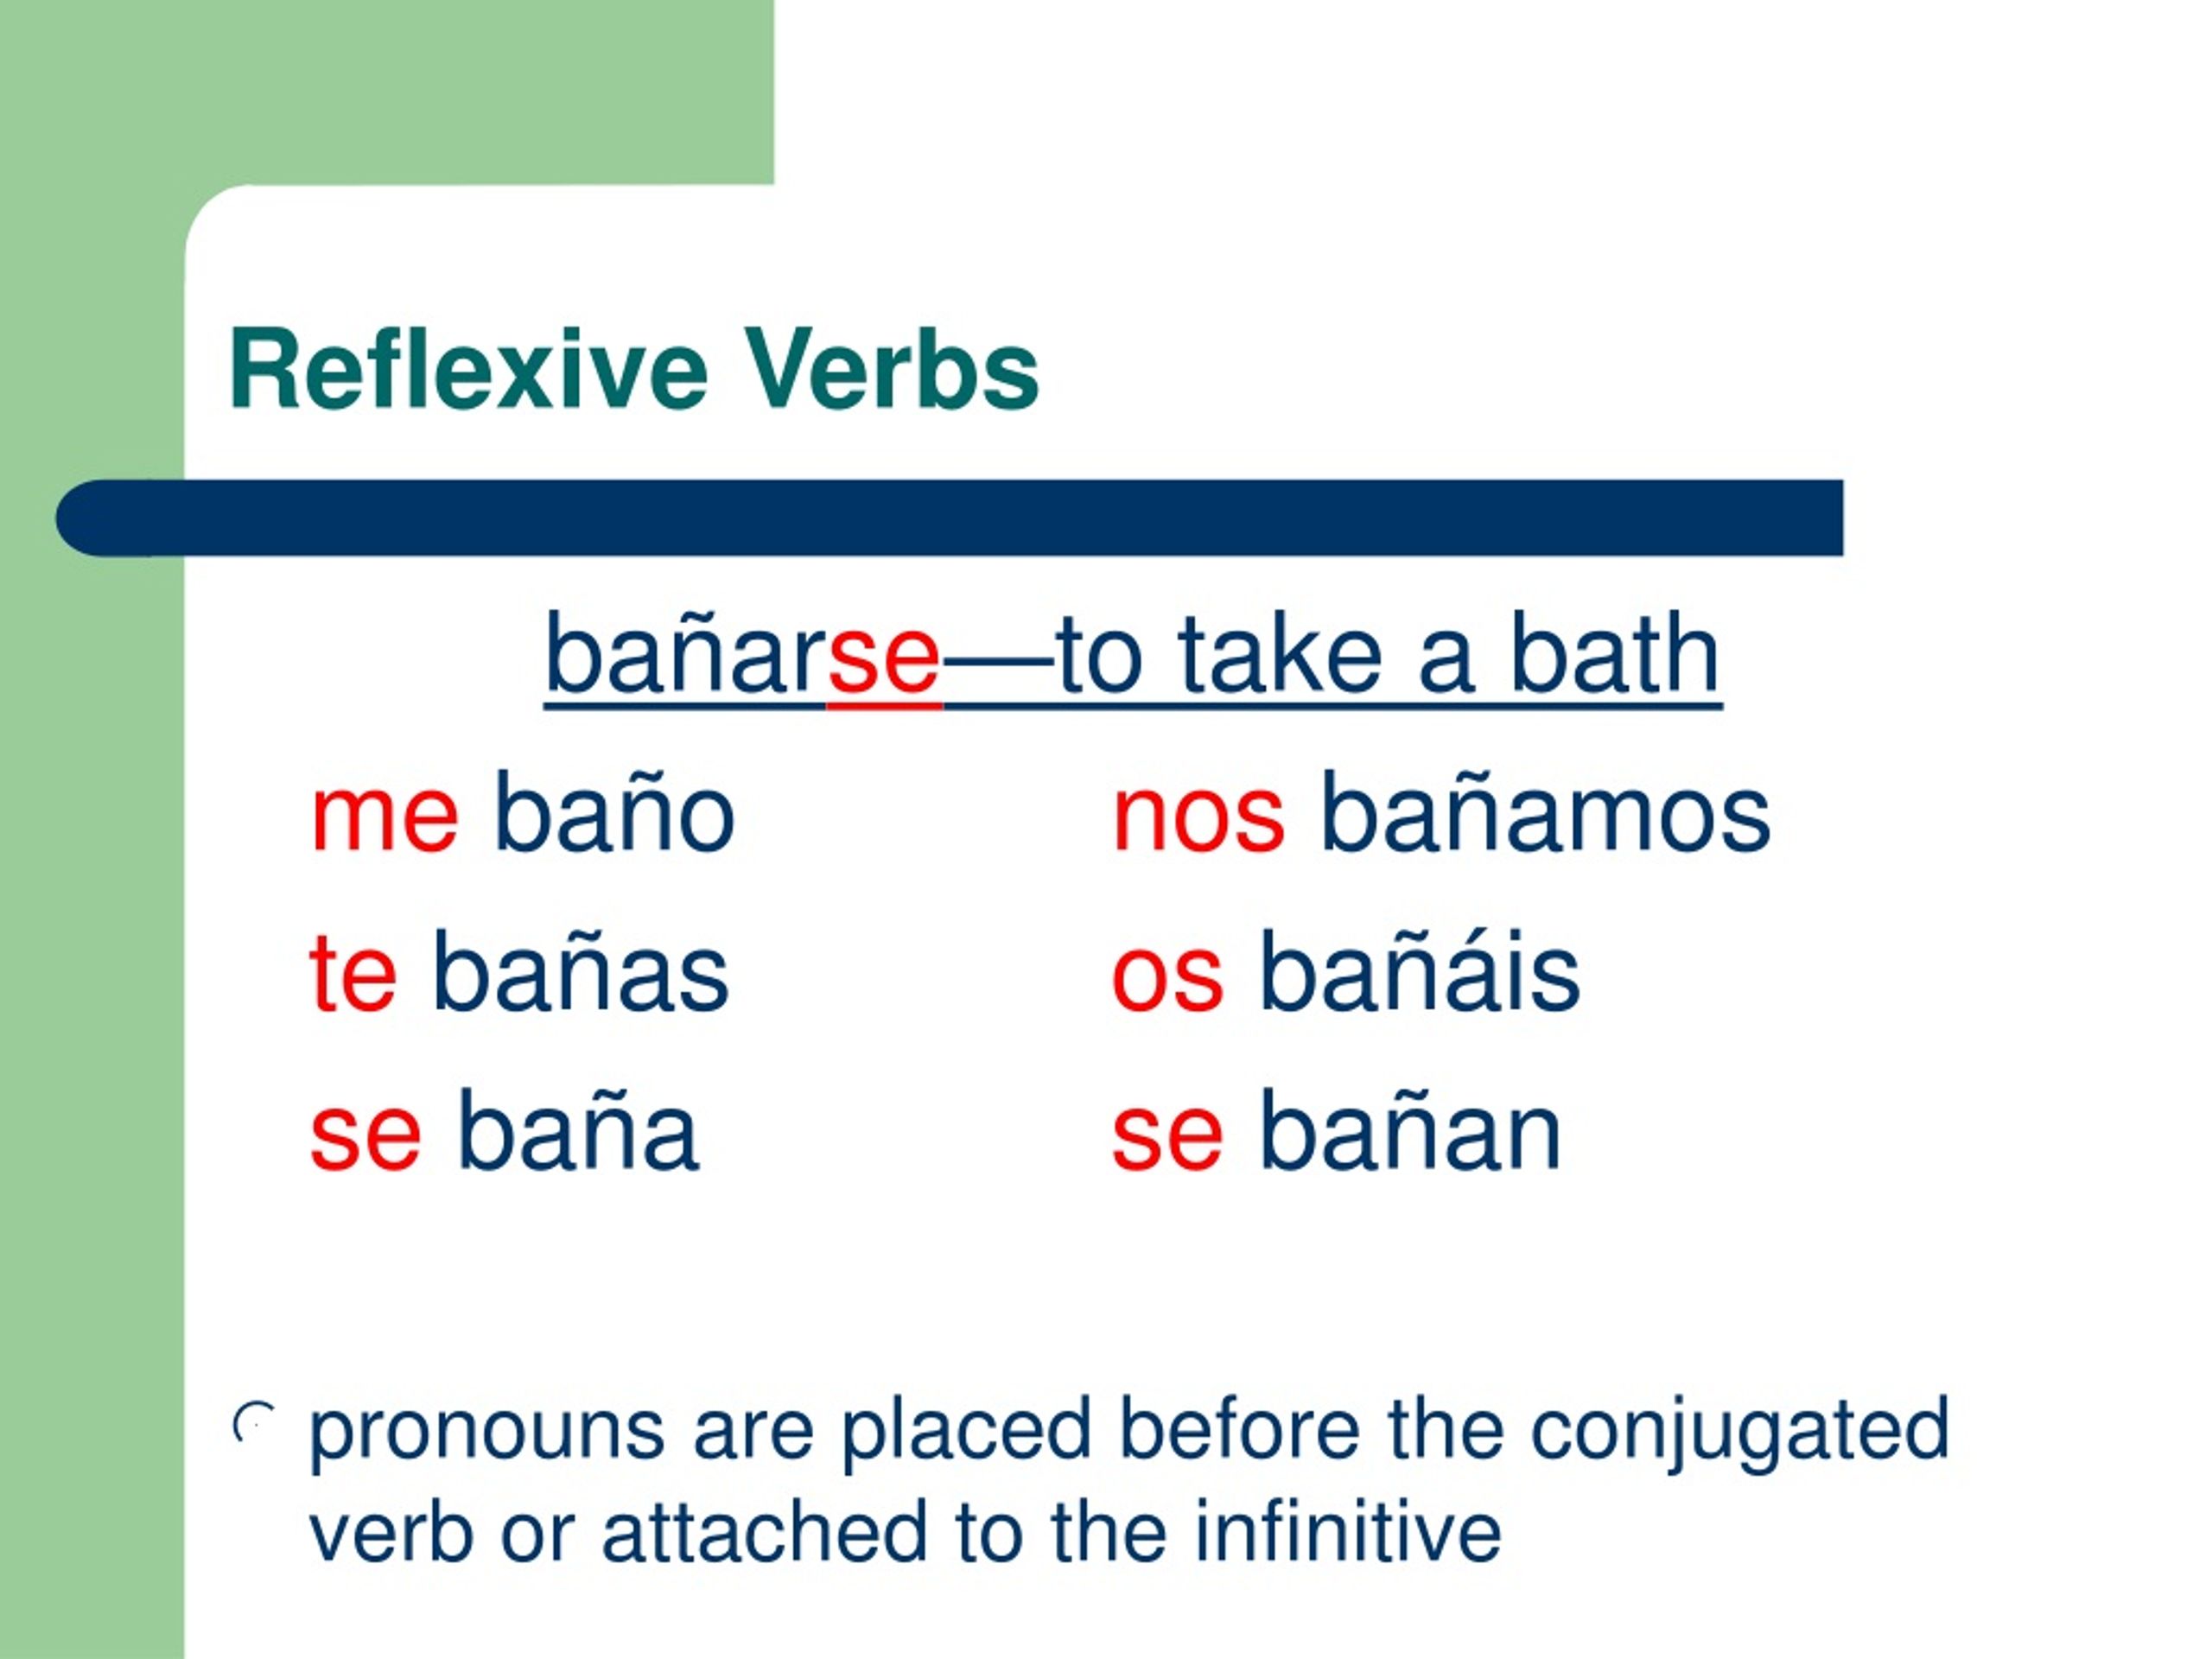 worksheet-reflexive-verbs-answer-key